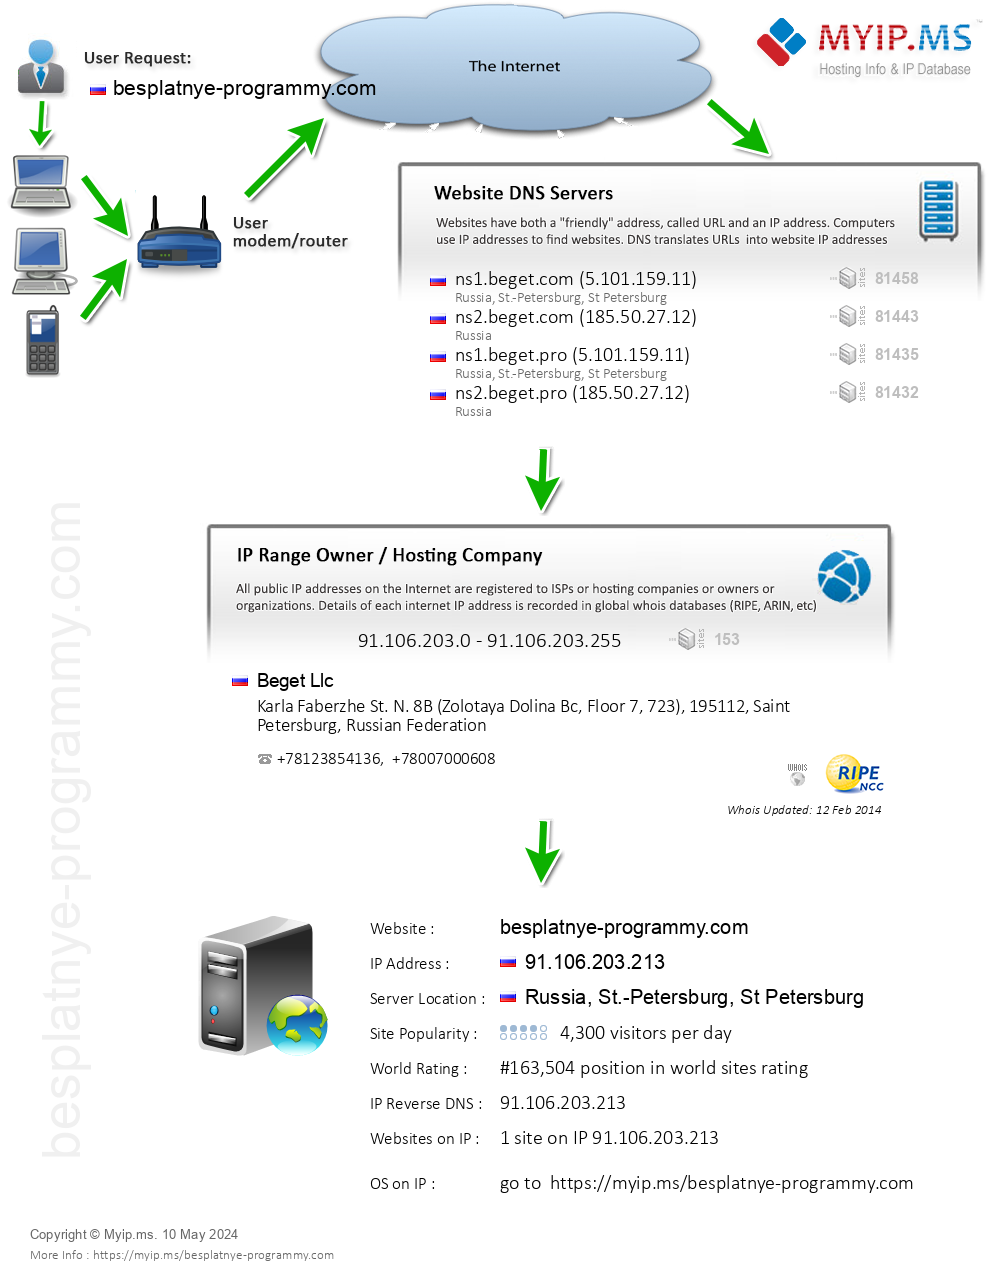 Besplatnye-programmy.com - Website Hosting Visual IP Diagram